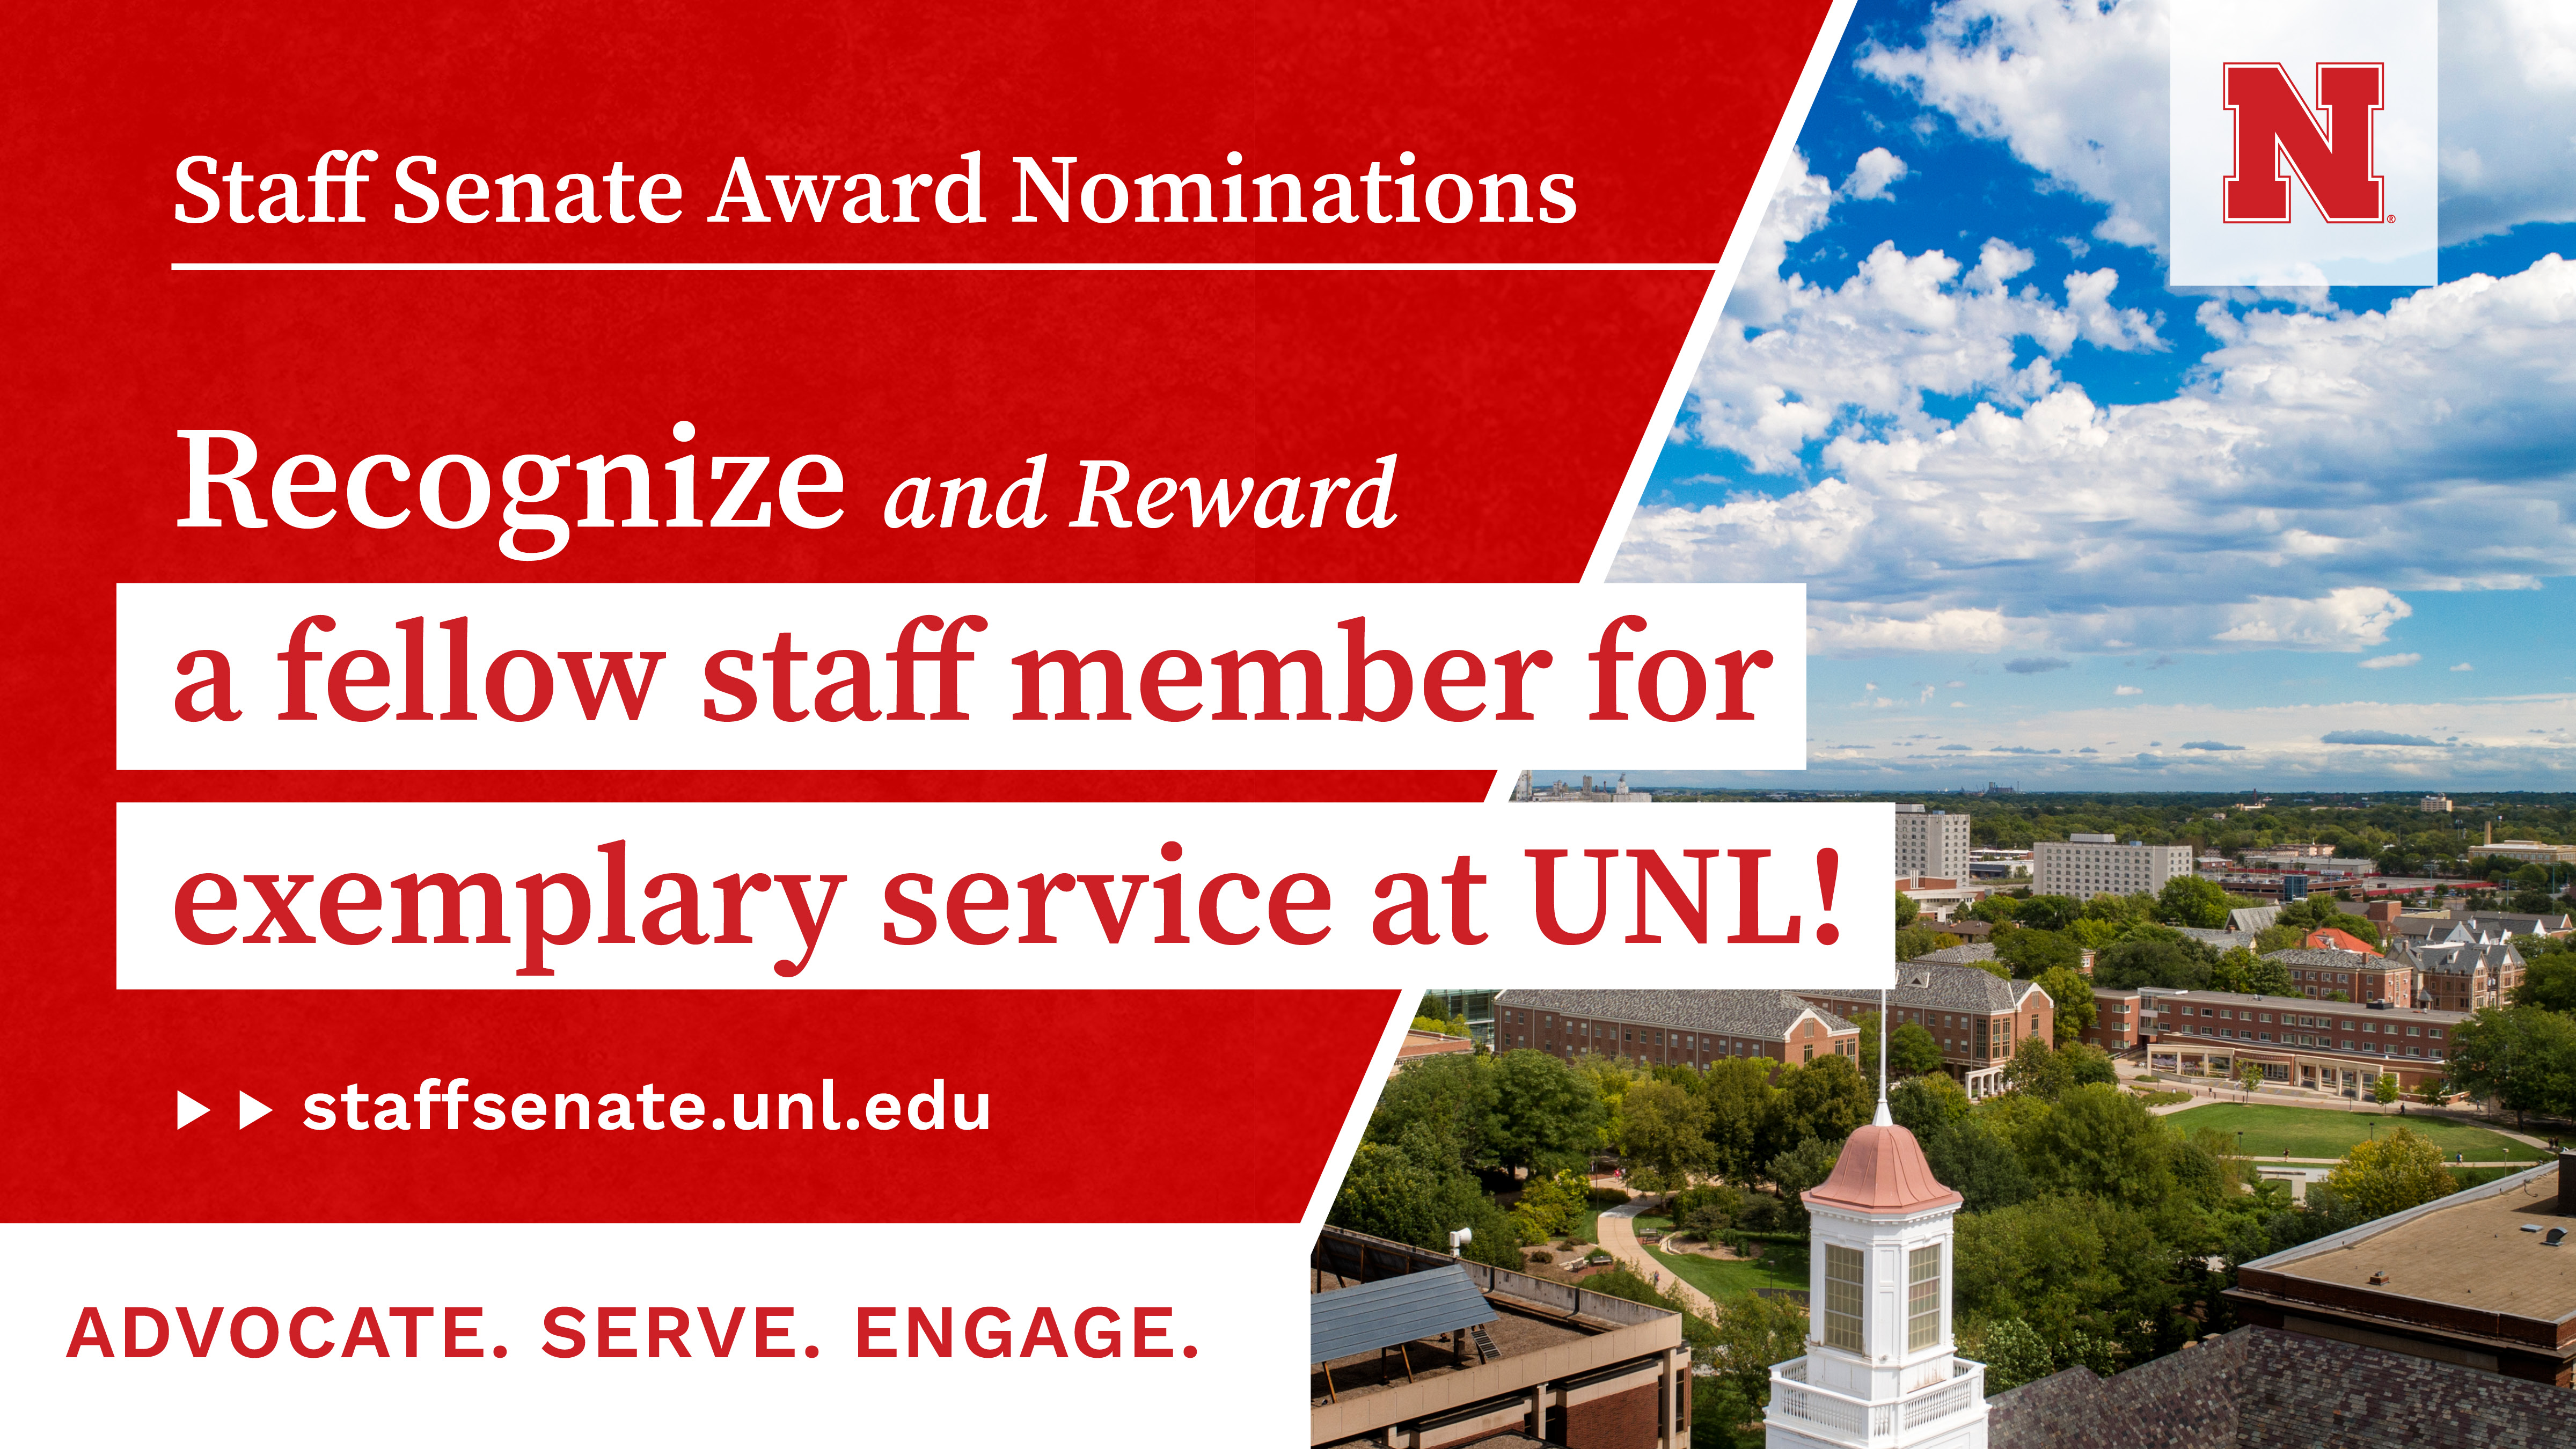 UNL Staff Senate accepting award nominations through March 15.